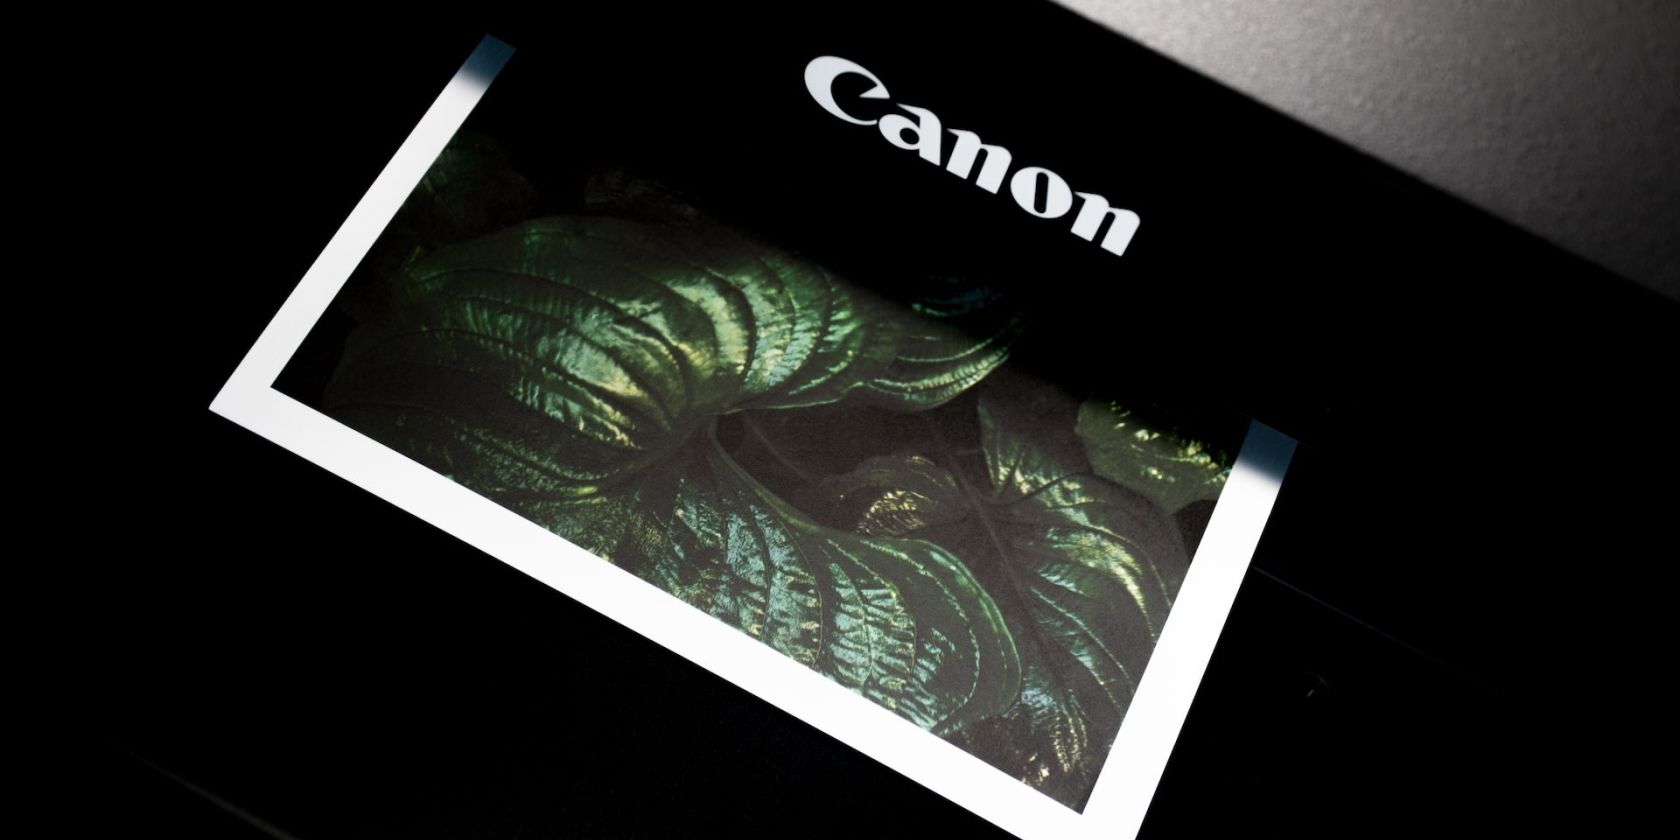 printing using a Canon printer